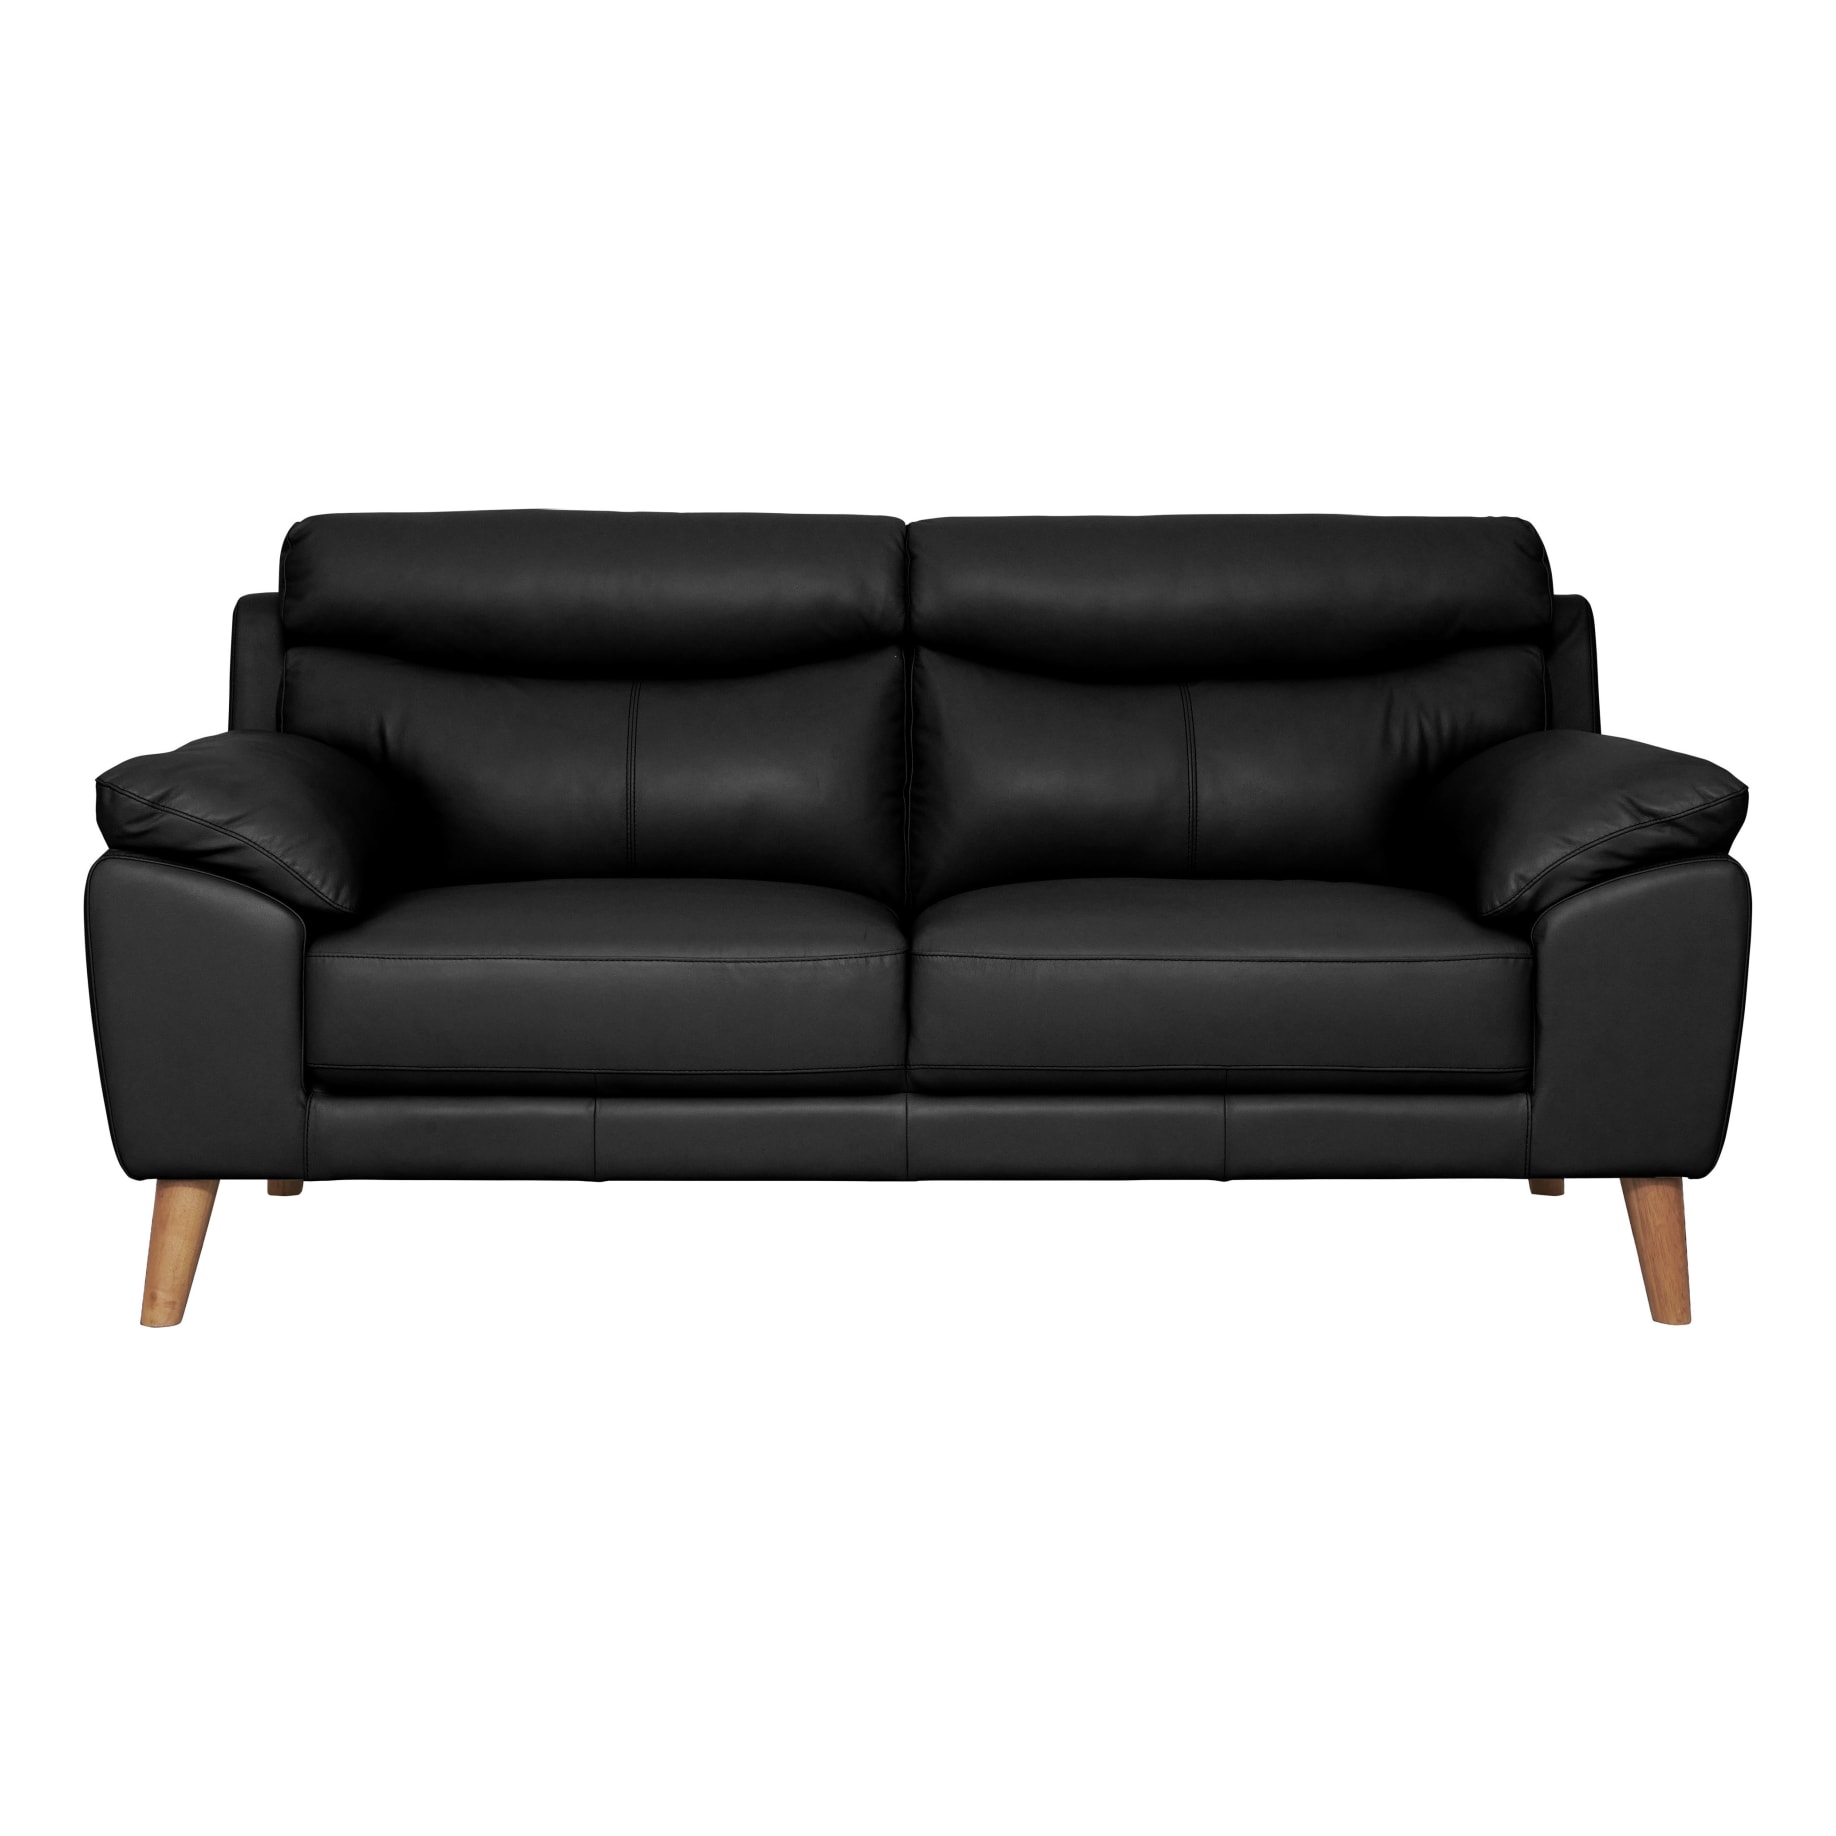 Bronco 2 Seater Sofa in Leather Black